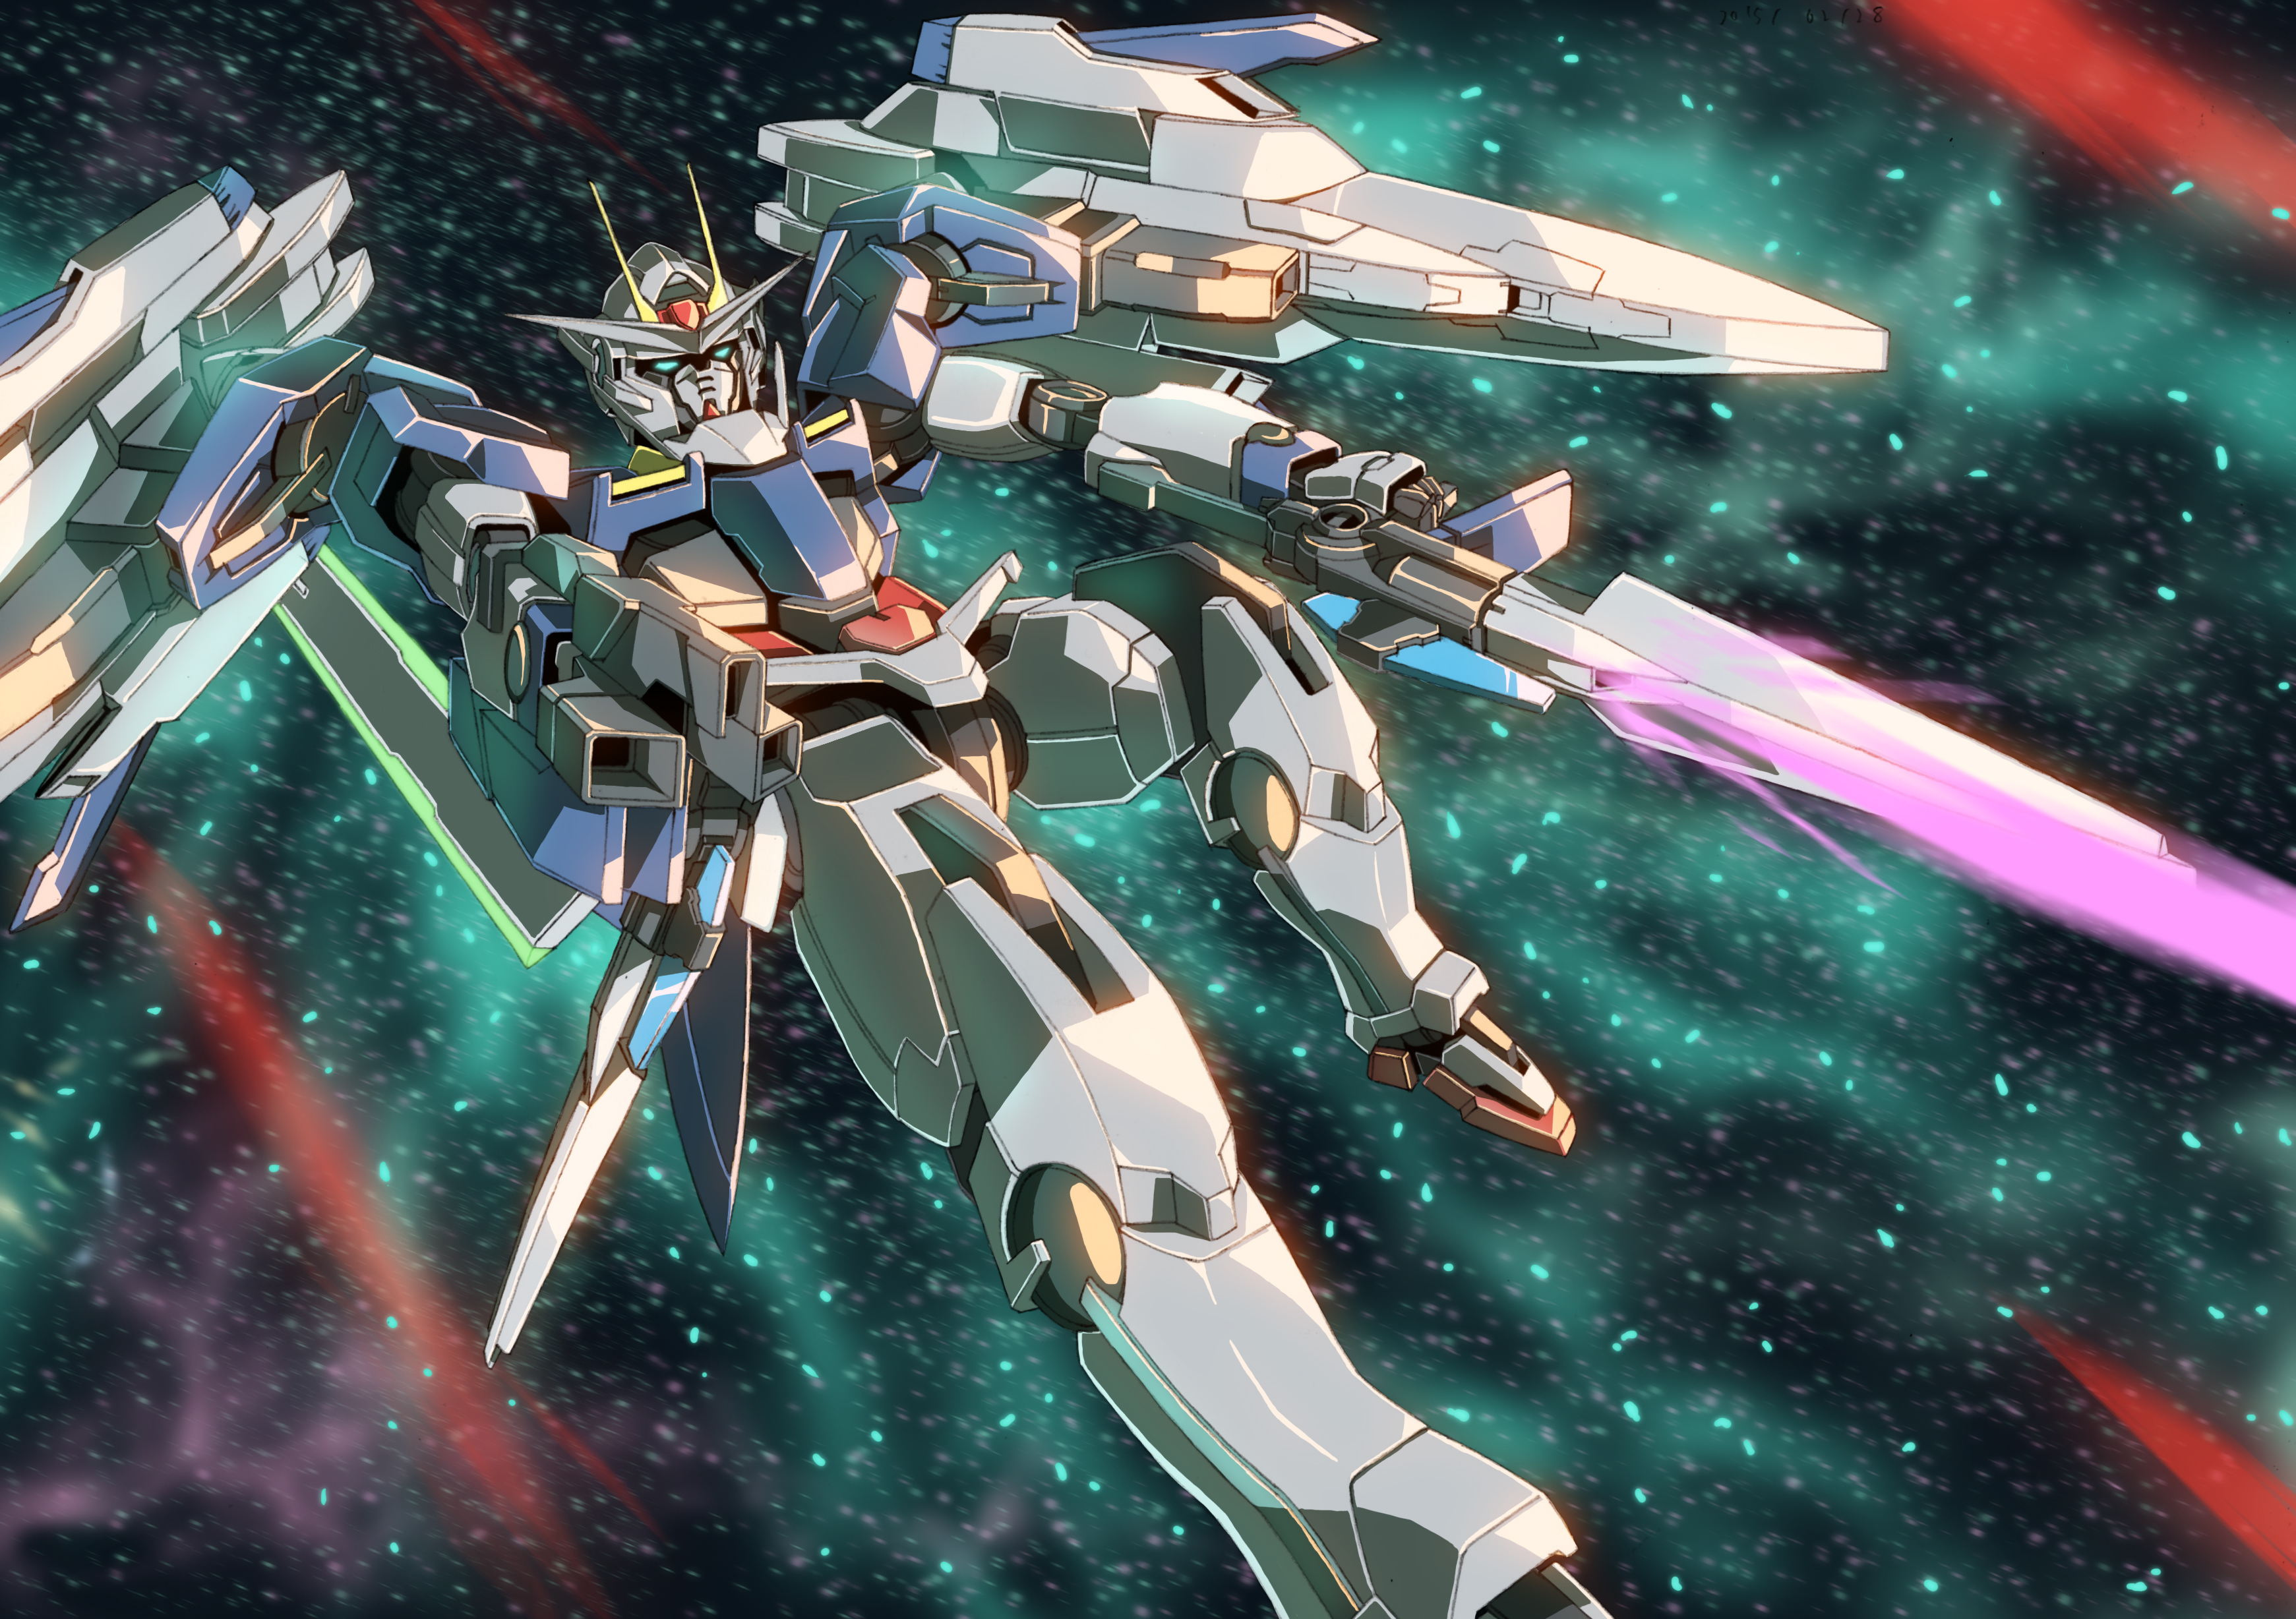 Anime 3482x2456 00 Raiser Mobile Suit Gundam 00 Super Robot Taisen Gundam mechs anime artwork digital art fan art